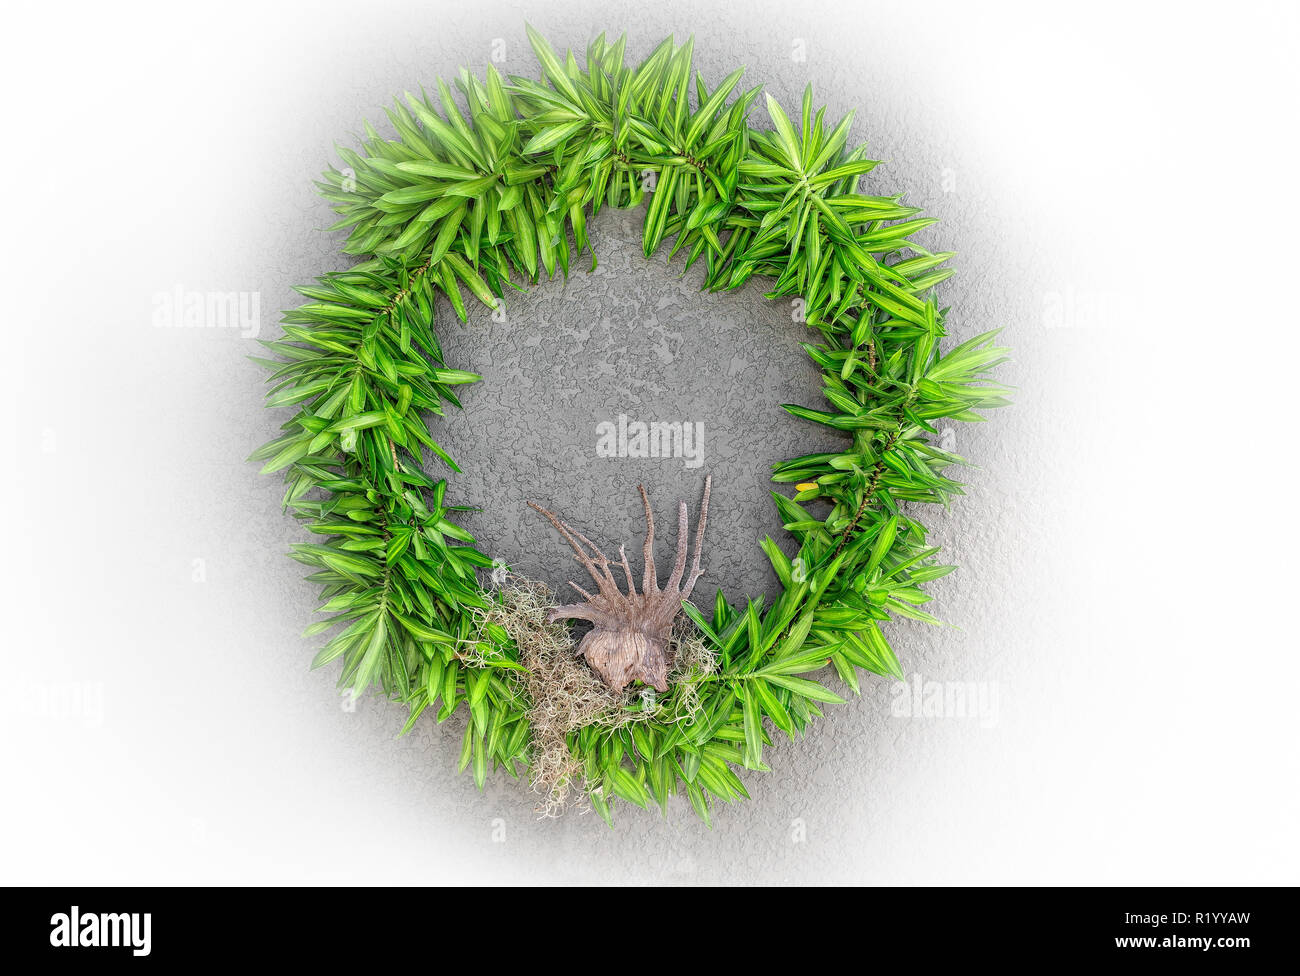 Holiday wreath made of natural Florida foliage Stock Photo